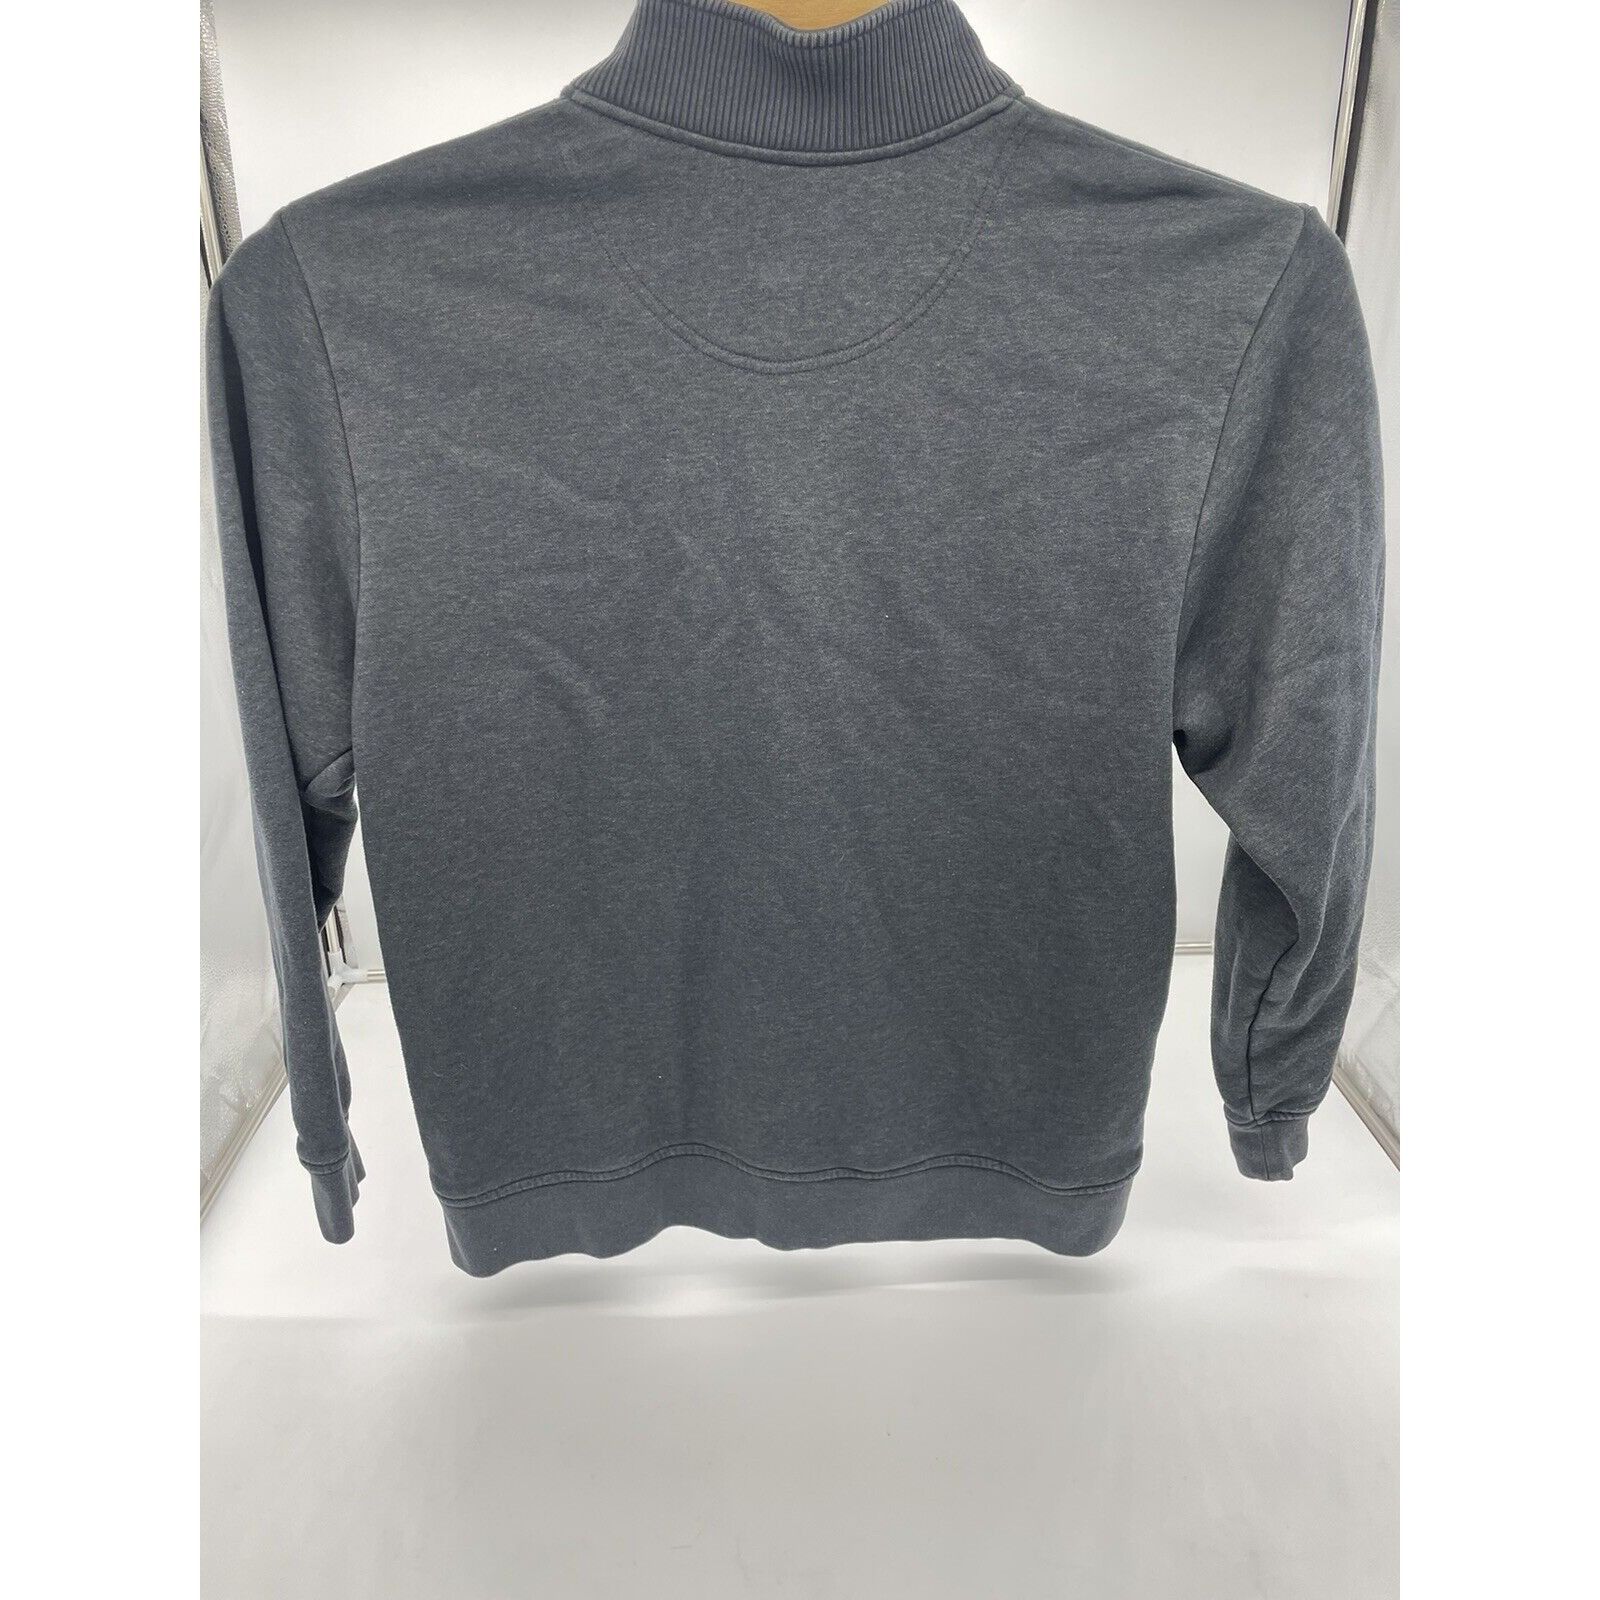 Orvis Orvis Men's Fleece Pullover Sz XL Gray 1/4 Zip Snap Sweatshi Size US XL / EU 56 / 4 - 5 Preview